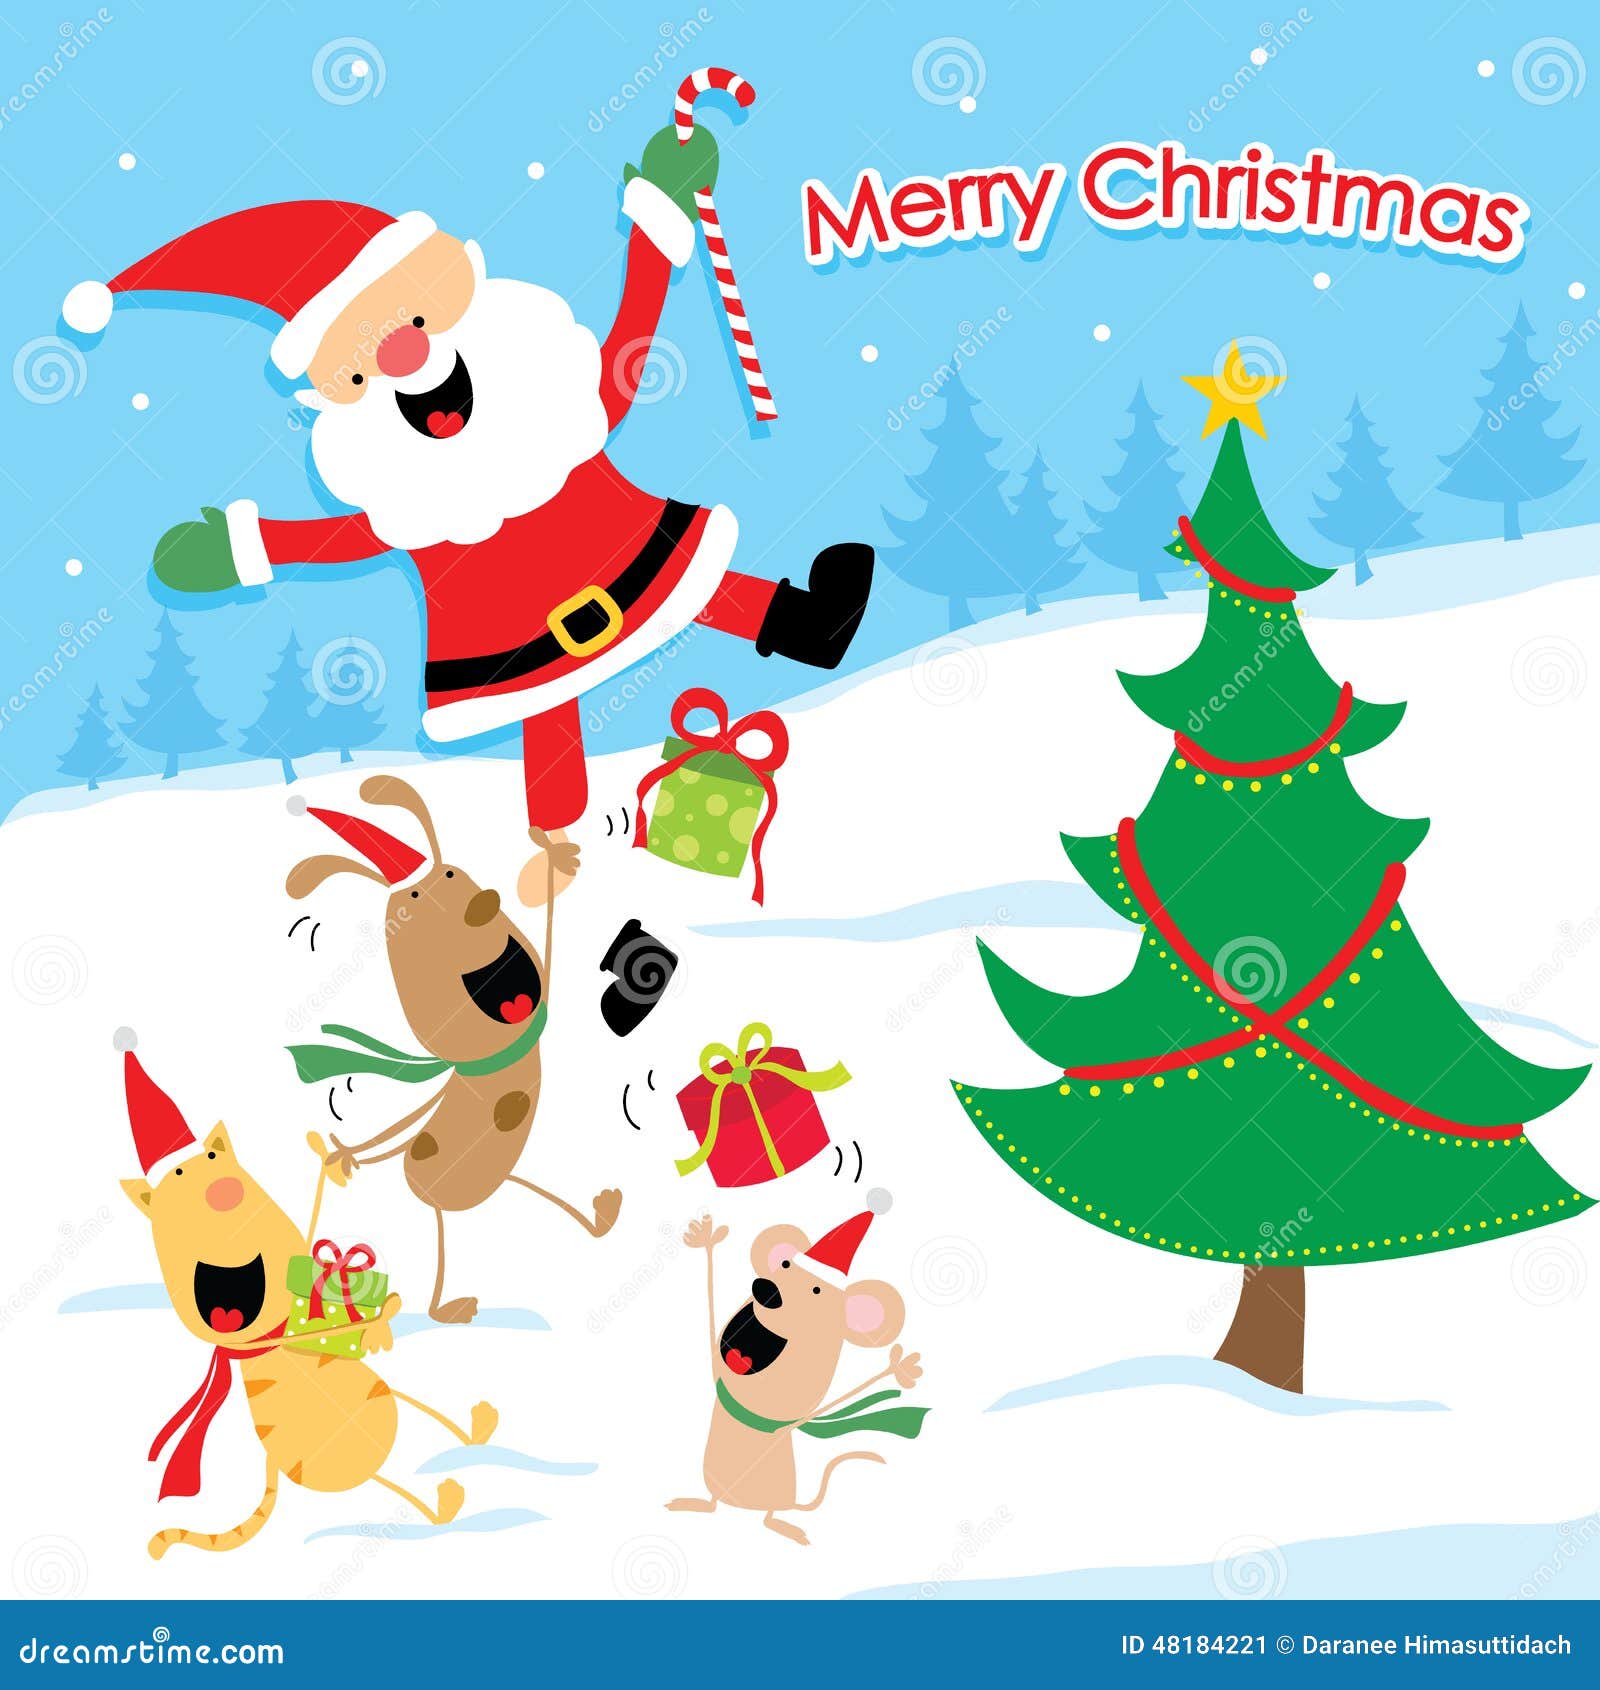 Merry Christmas Cartoon Vector Stock Vector - Image: 48184221